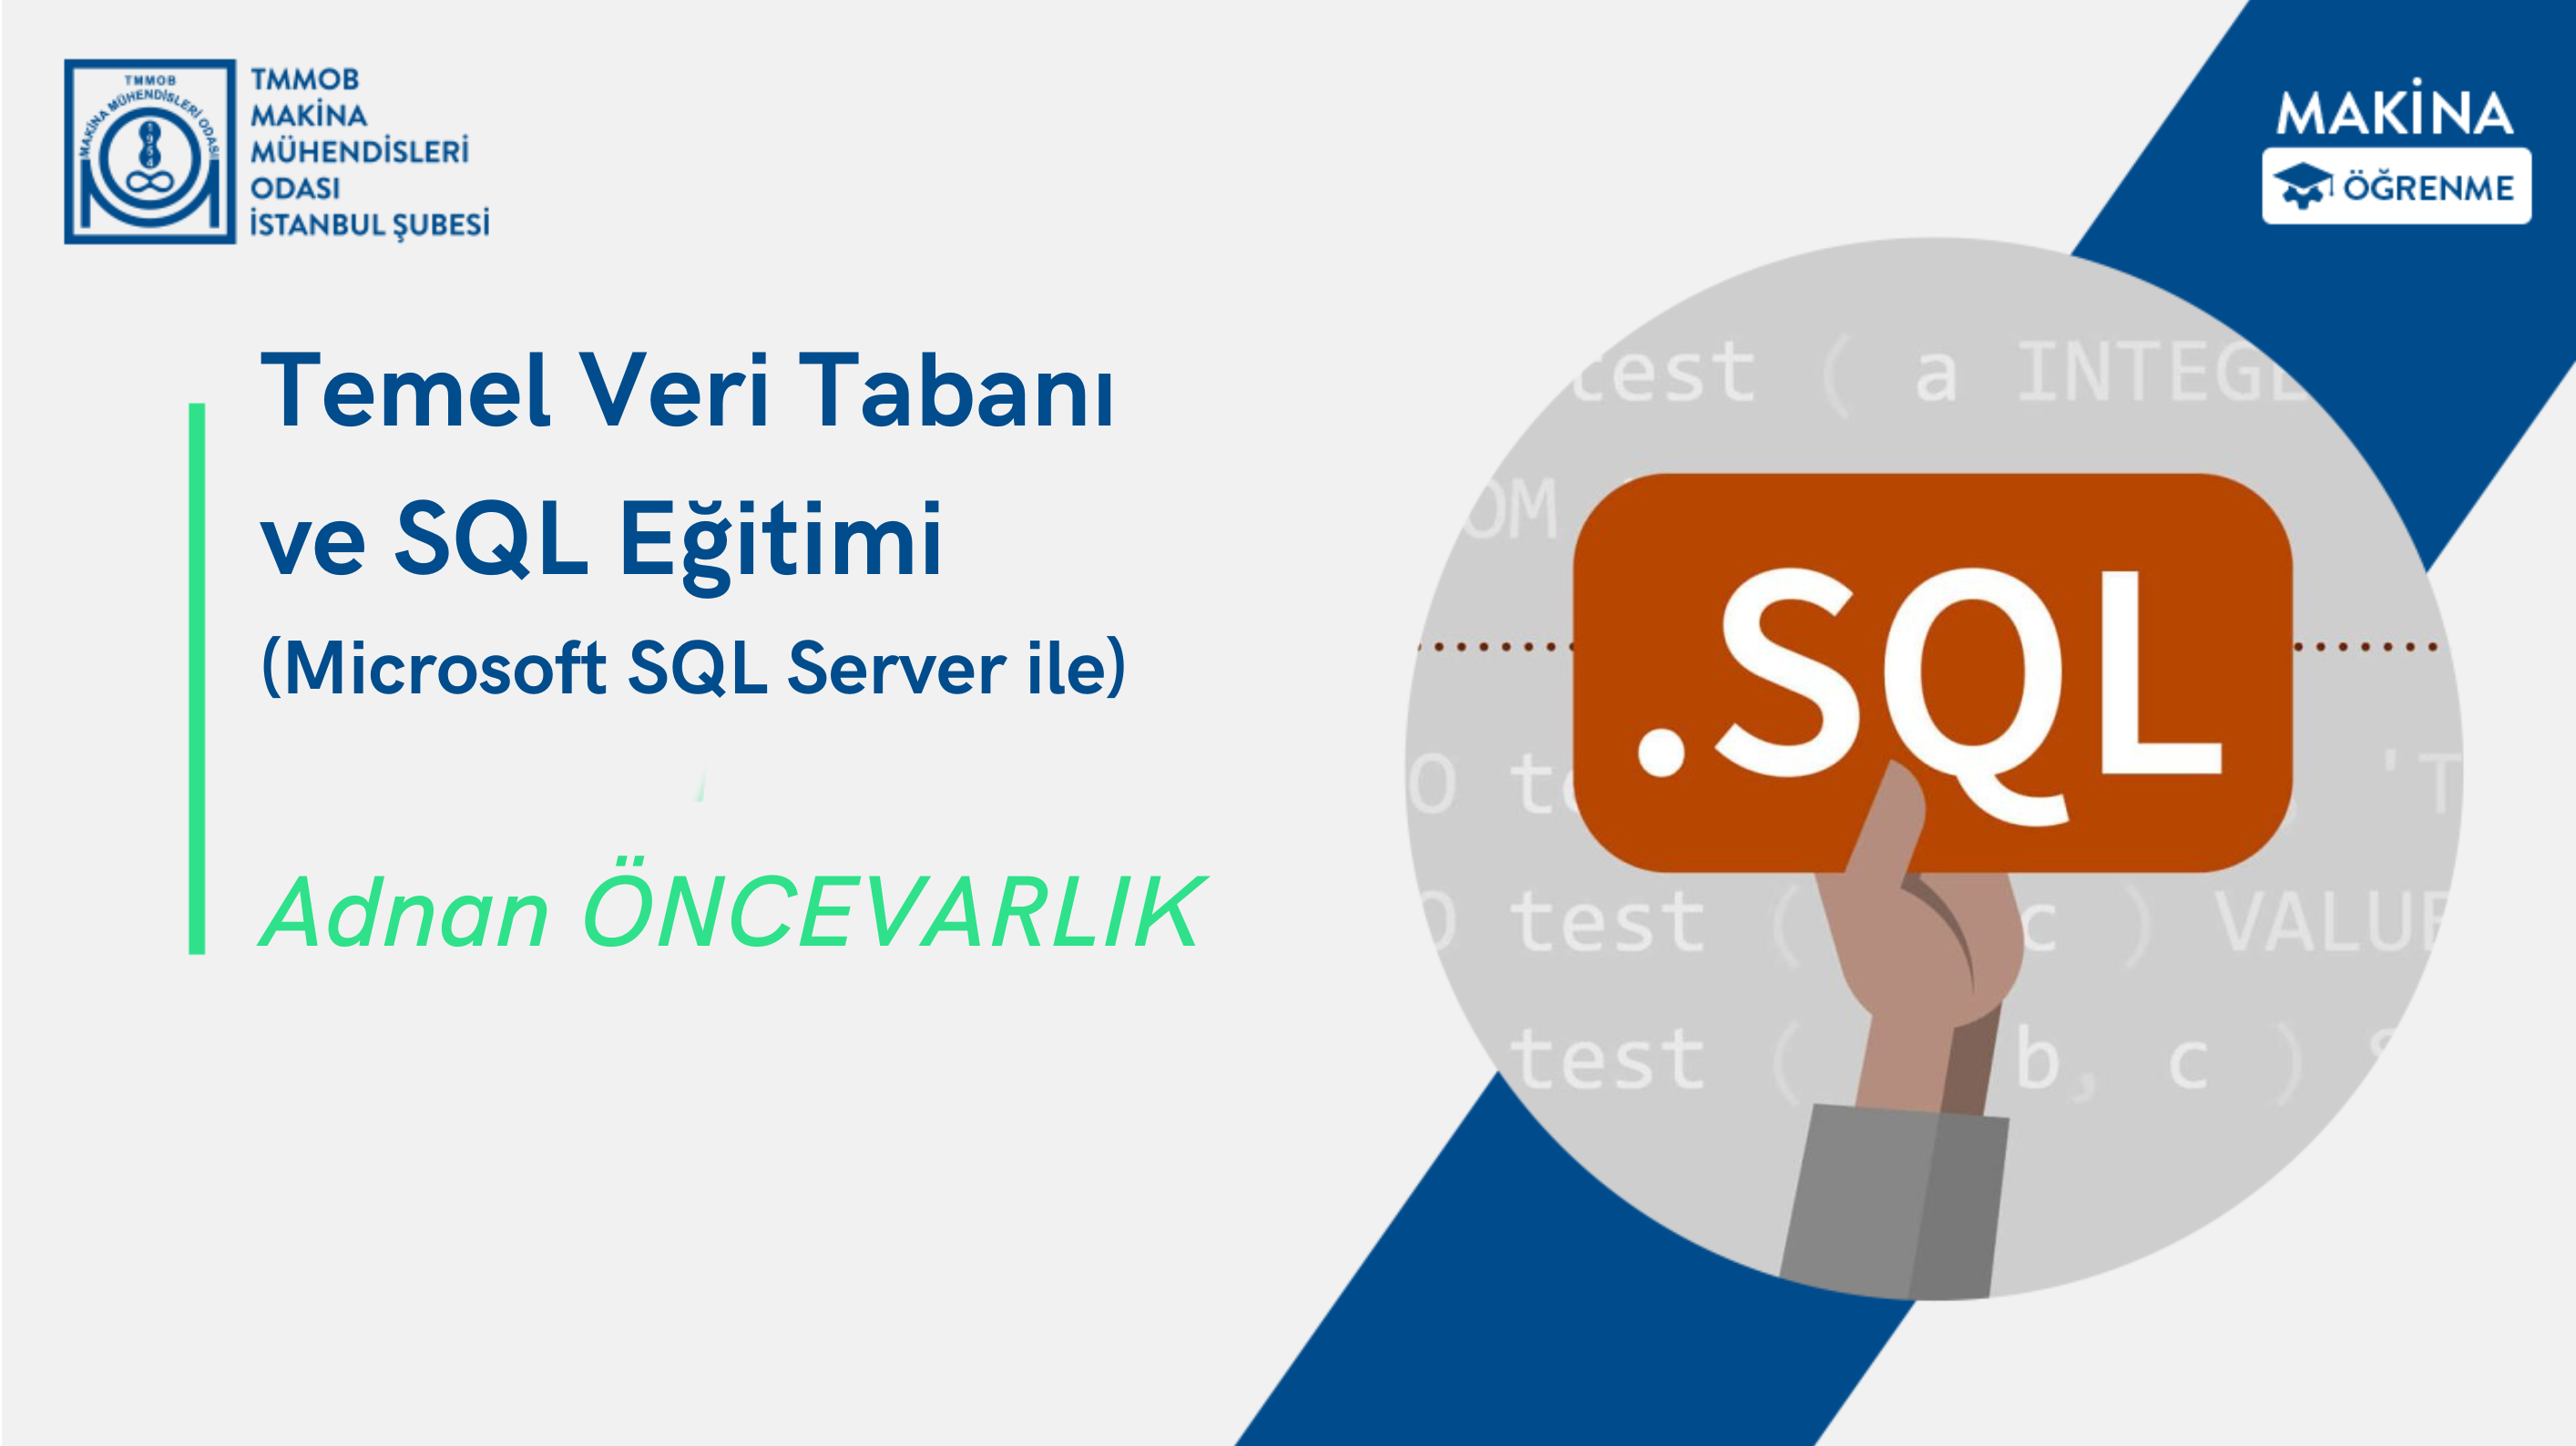 Temel Veri Tabanı ve SQL Eğitimi (Microsoft SQL Server ile)